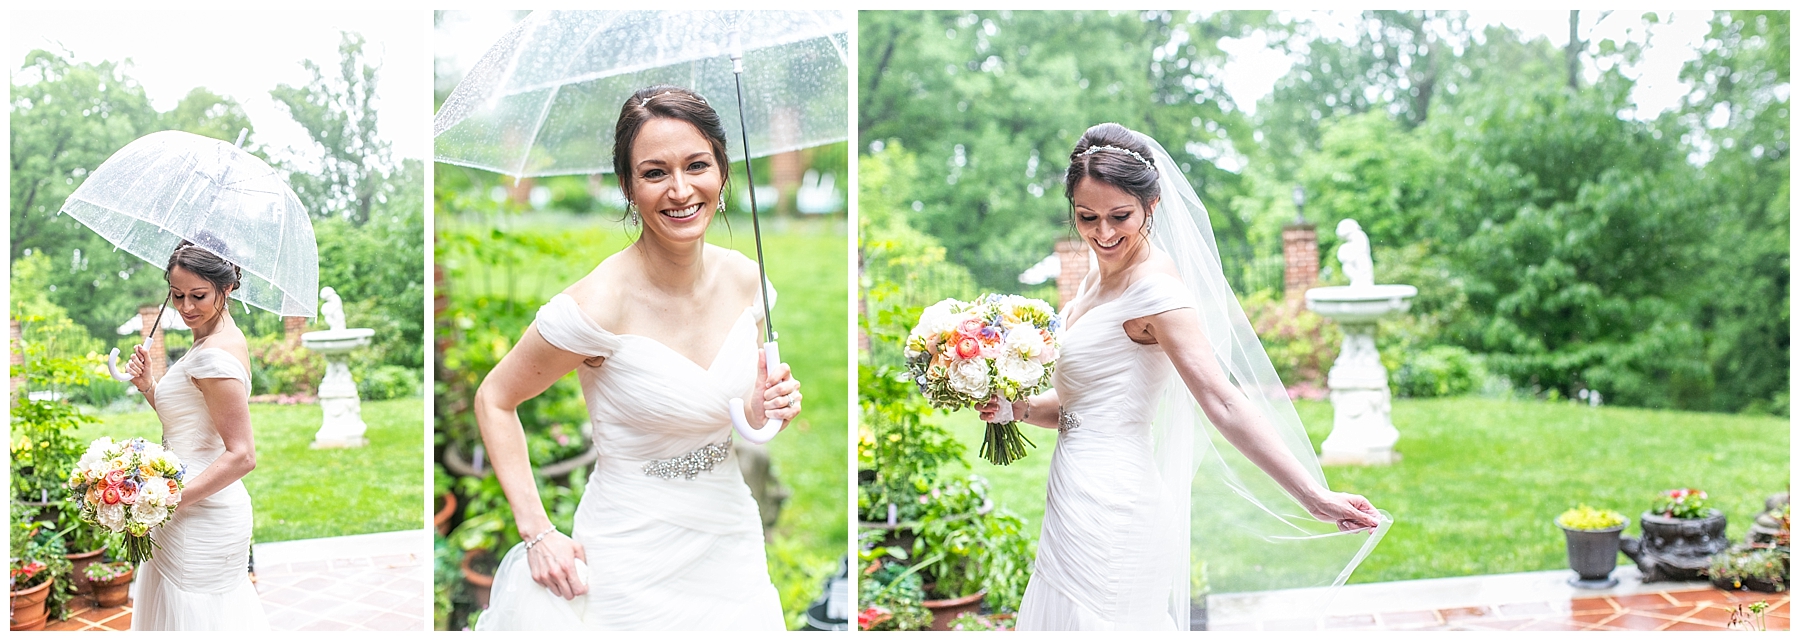 Ashley + Kevin Gramercy Mansion Rainy Day Baltimore Wedding Living Radiant Photography photos_0034.jpg